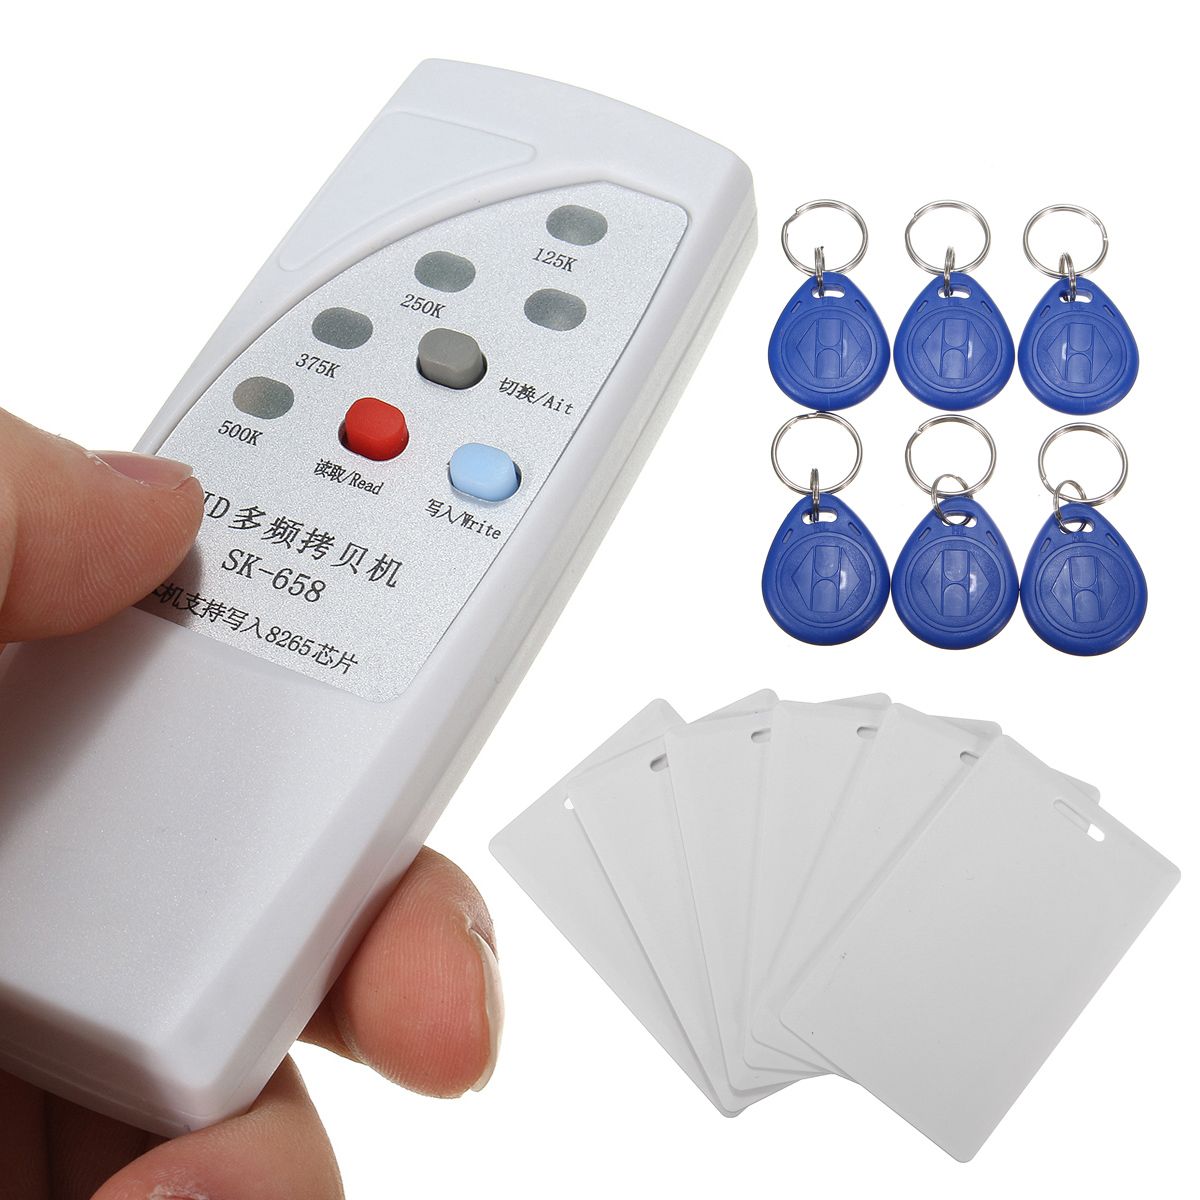 DANIU-SK-658-13Pcs-125KHz-RFID-ID-Card-Reader-Writer-Copier-Duplicator-with-6-CardsTags-Kit-1202818